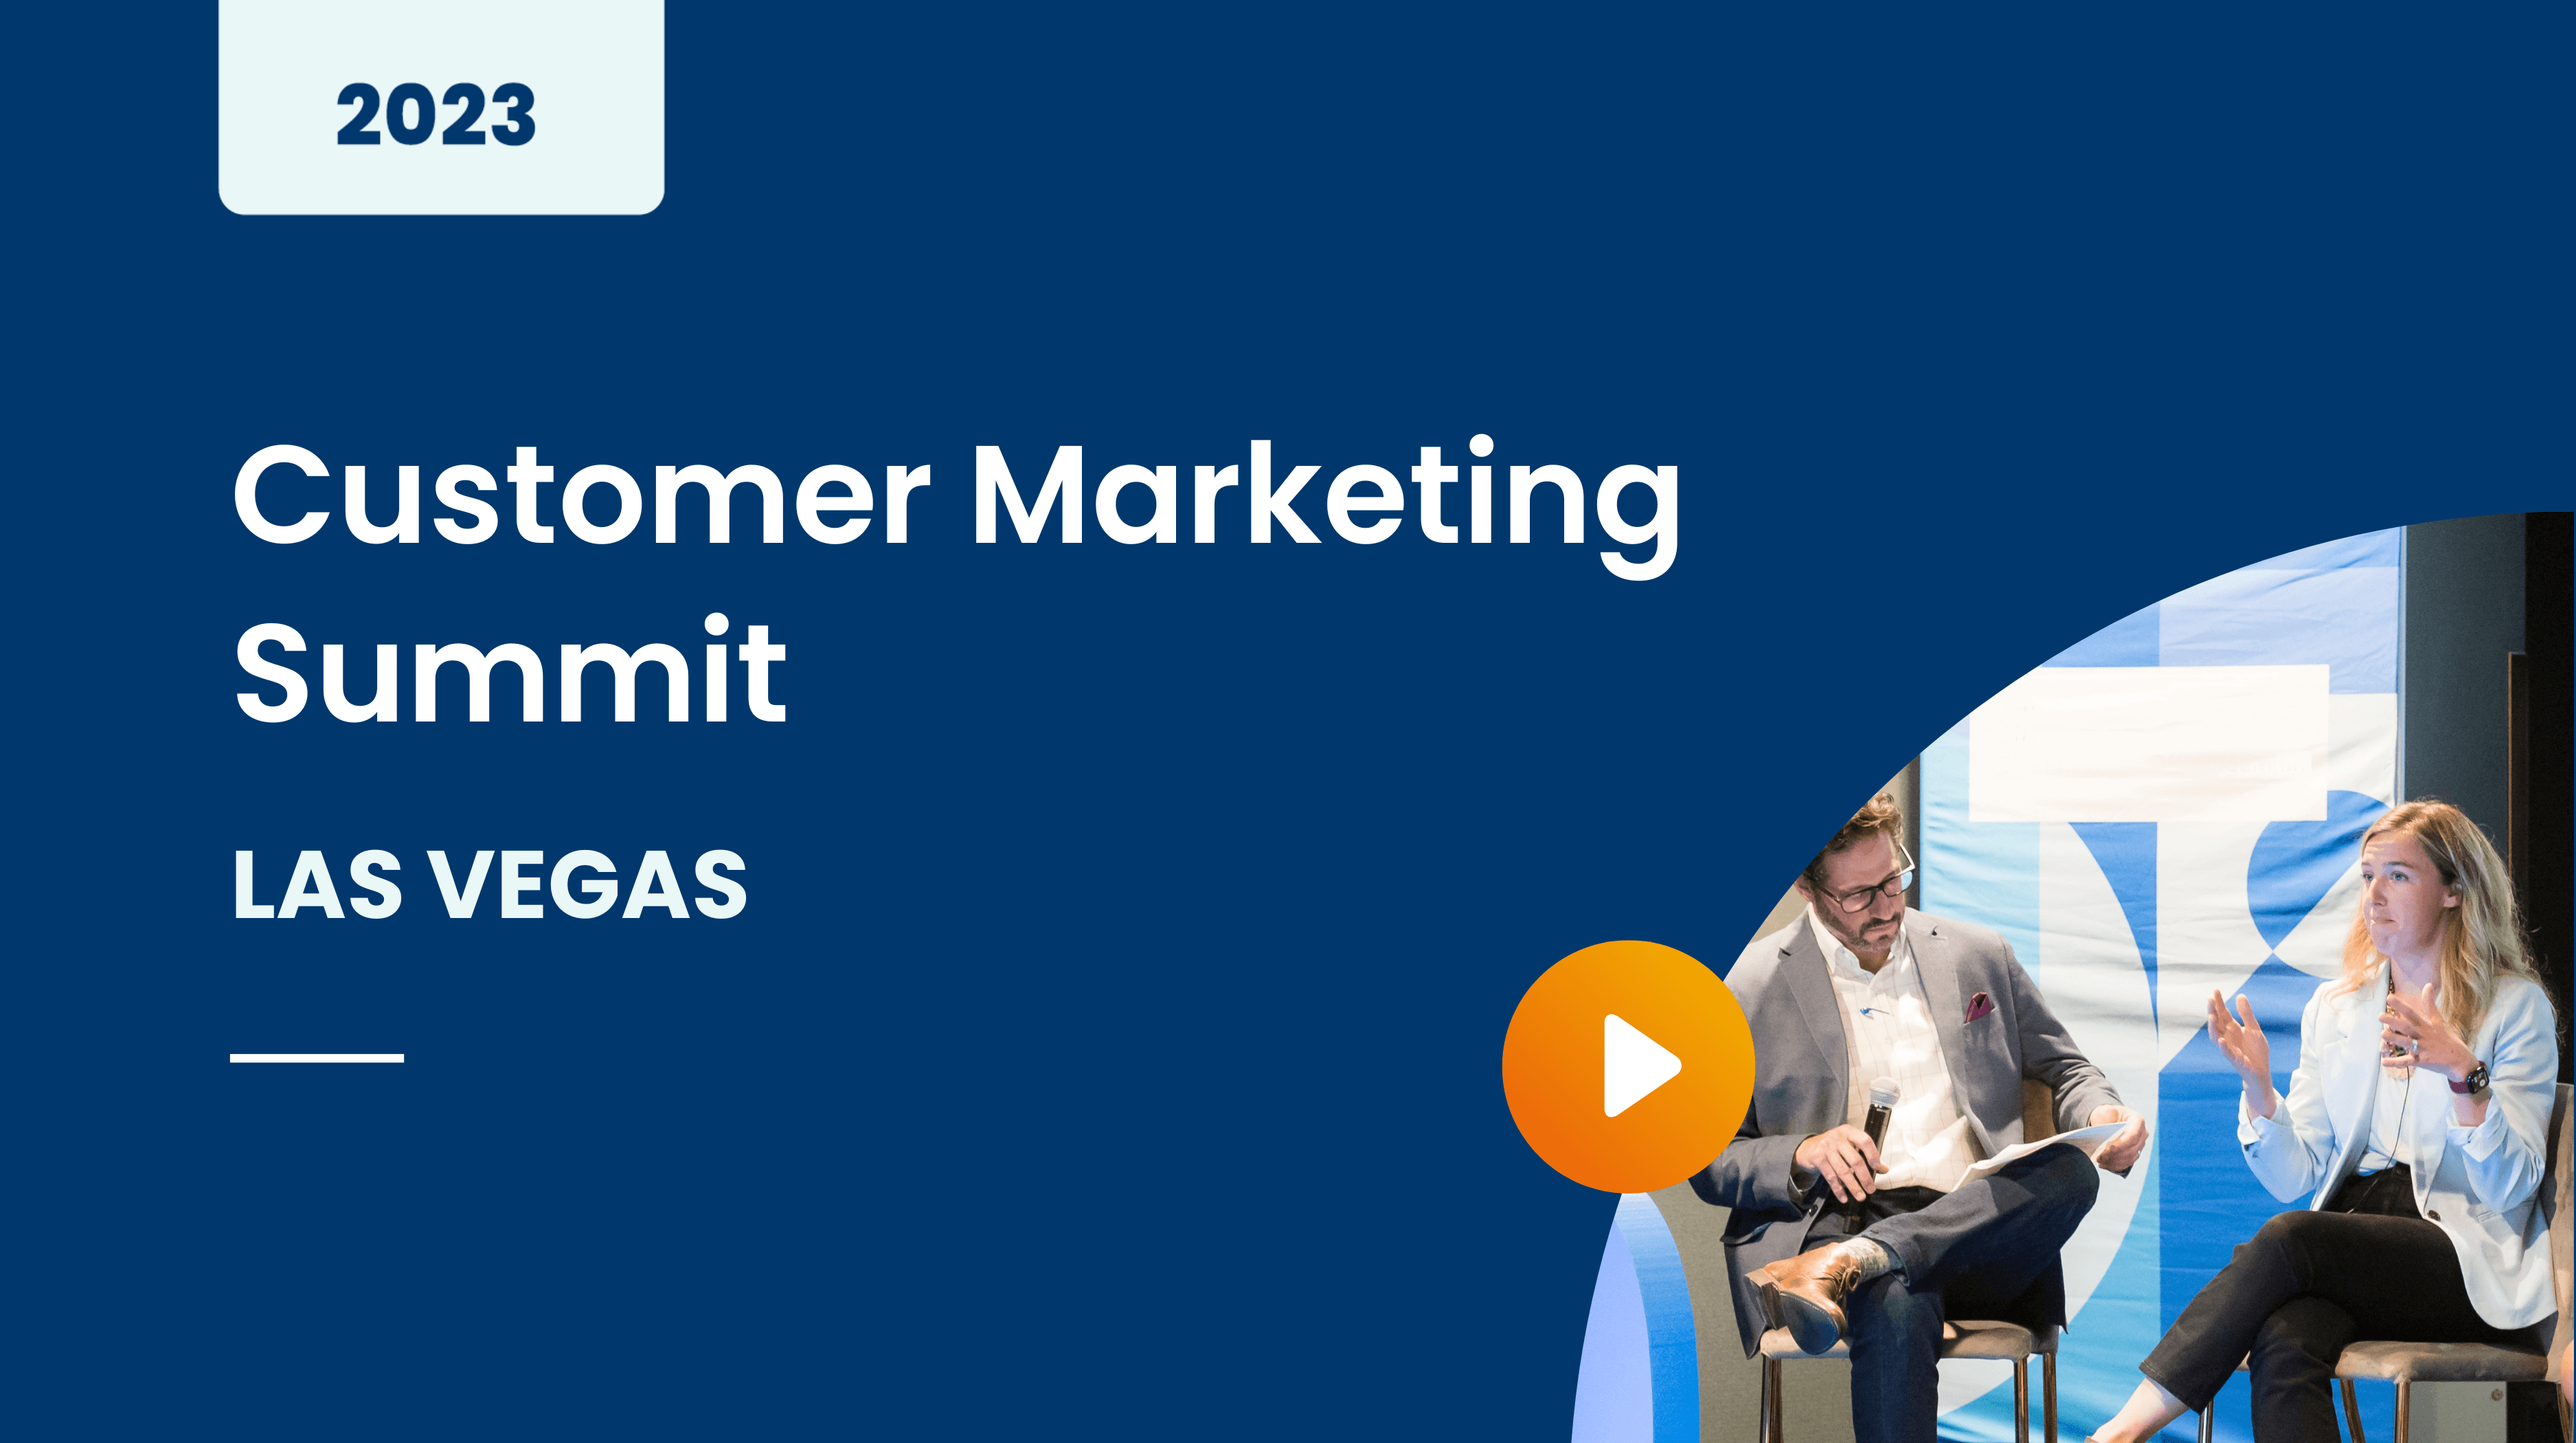 Customer Marketing Summit Las Vegas 2023